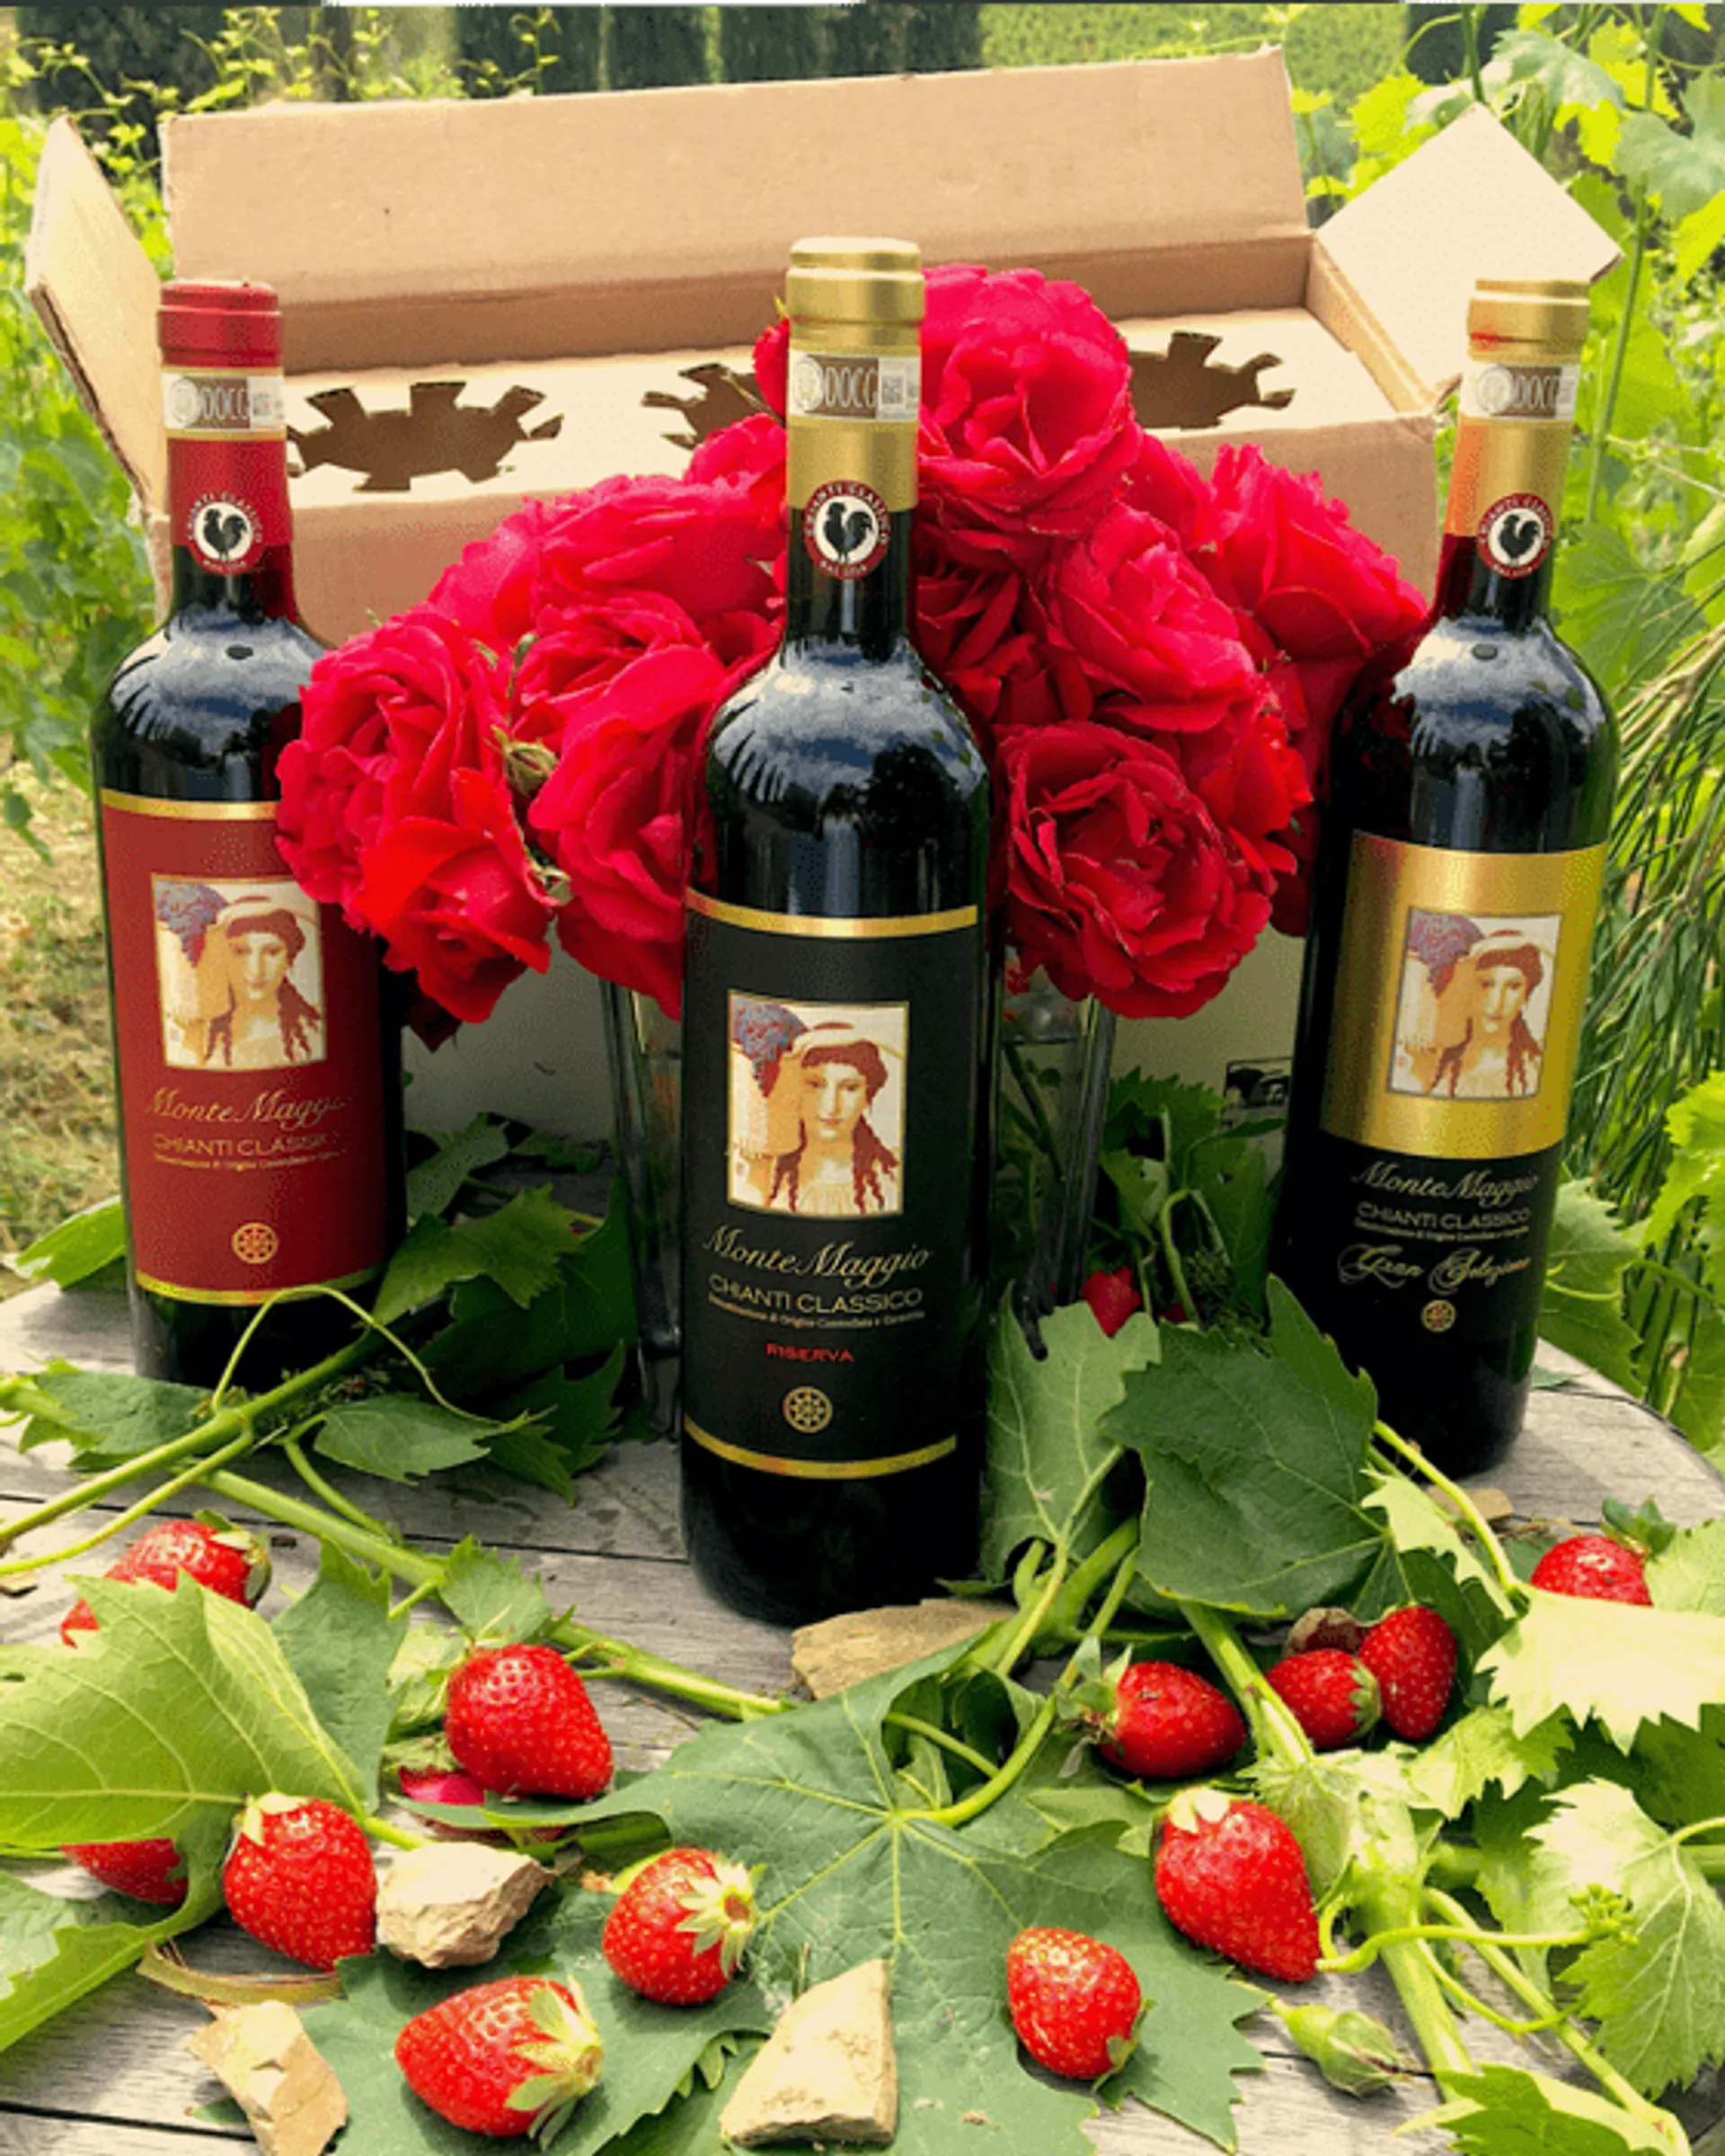 Vin rouge BIO Chianti Sangiovese DOCG Toscana de Montemaggio, Italie